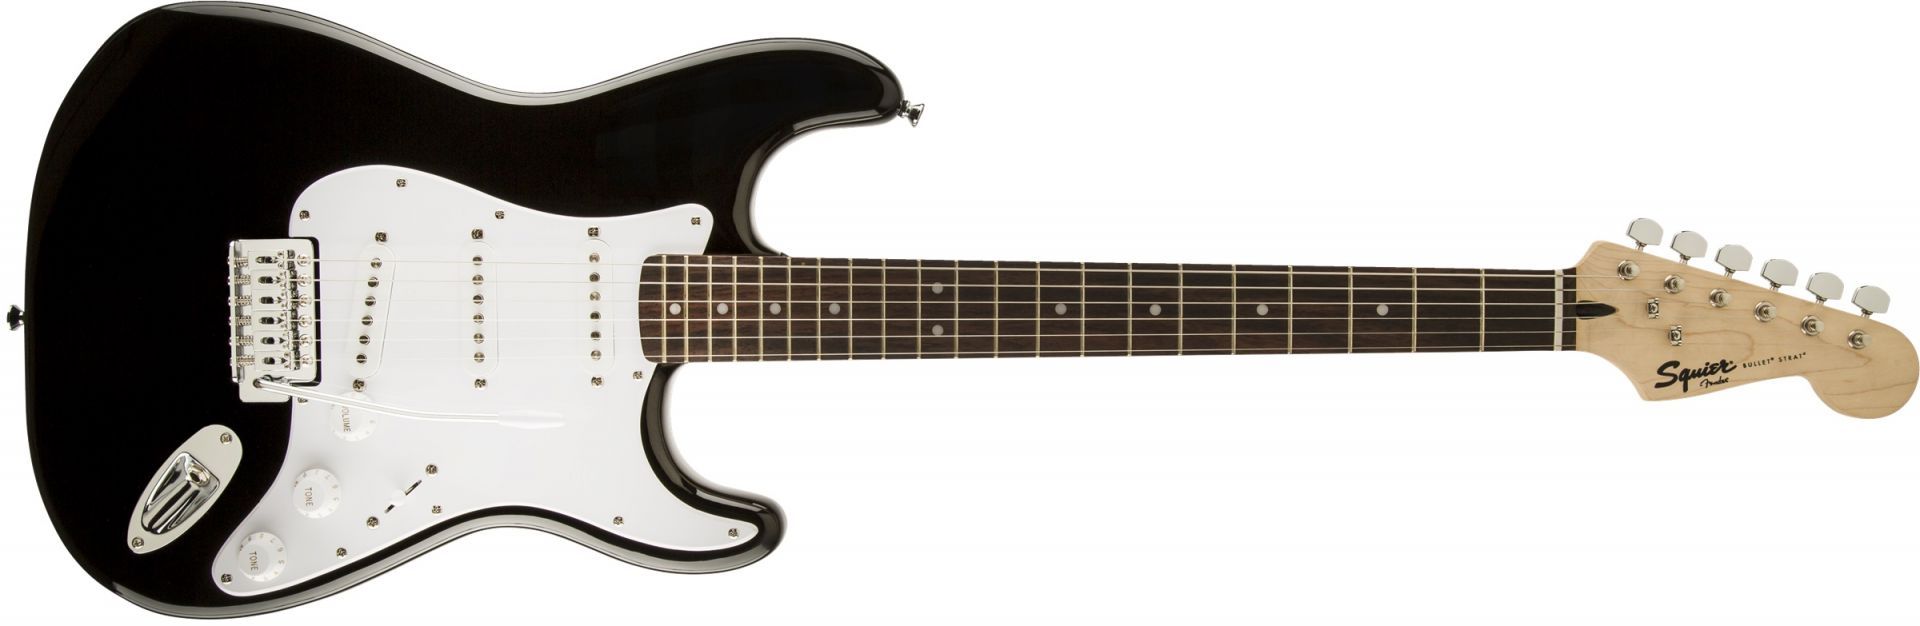 Squier Bullet Stratocaster Black